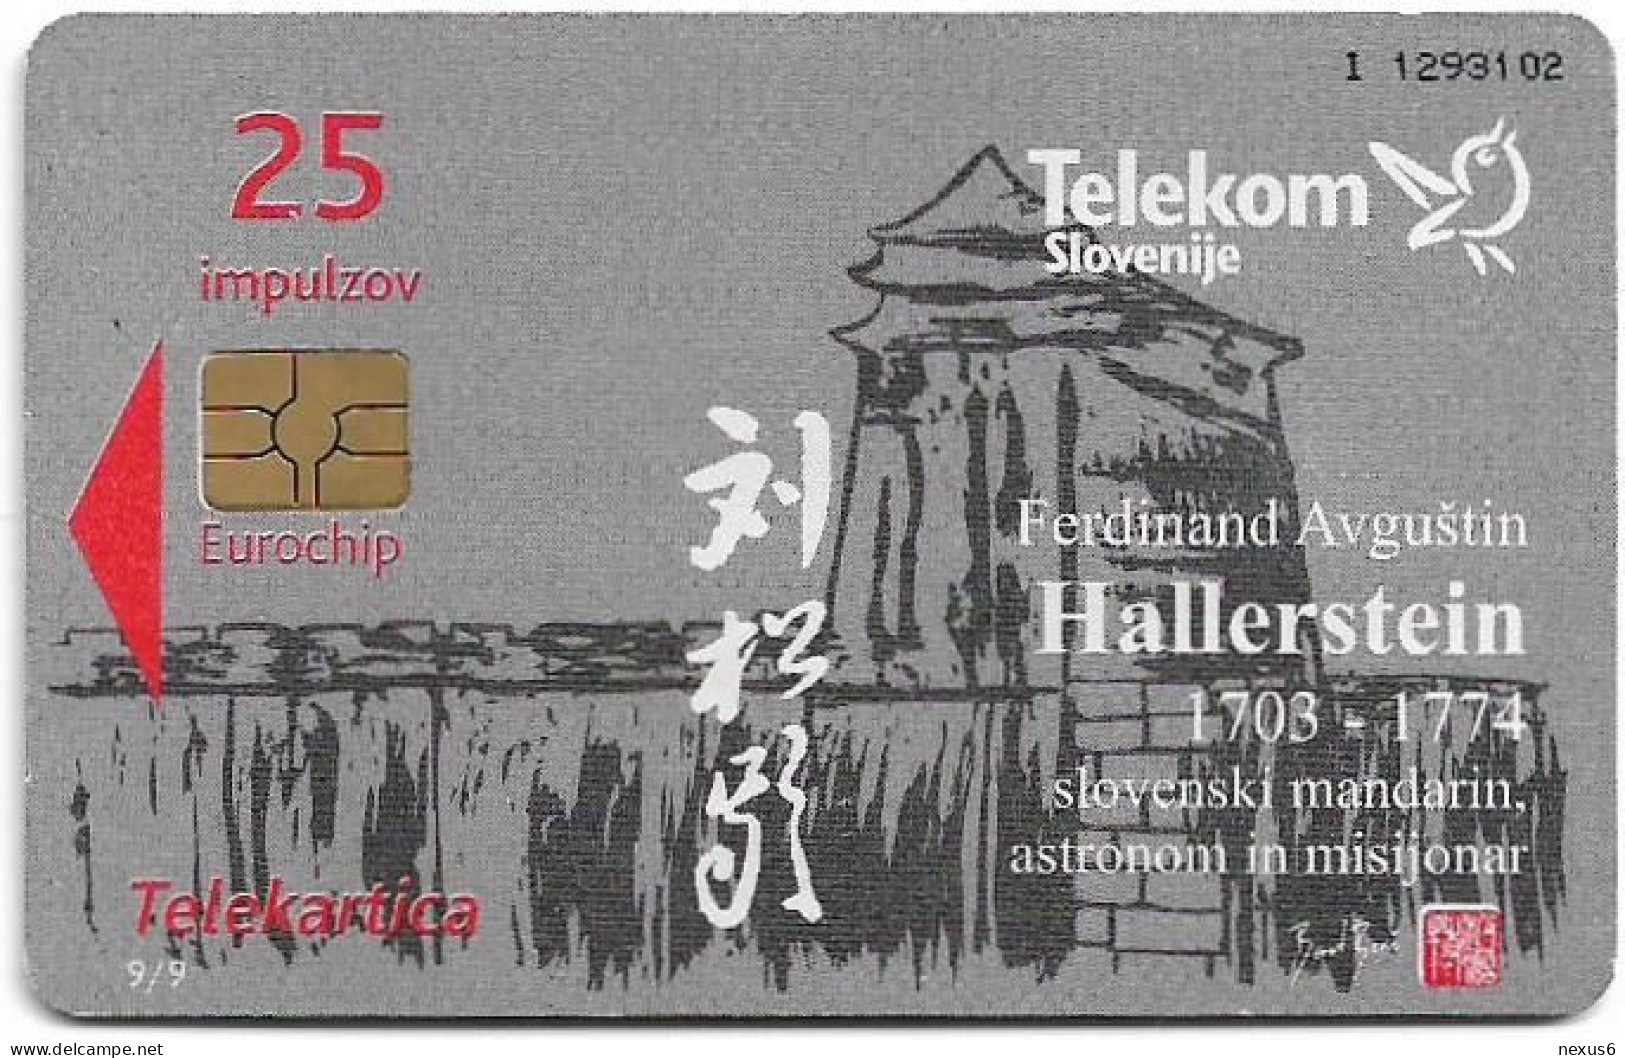 Slovenia - Telekom Slovenije - Mandarin F. A. Hallerstein - 9/9, Gem5 Red, Short Cn., 10.2007, 25Units, 5.000ex, Used - Slowenien